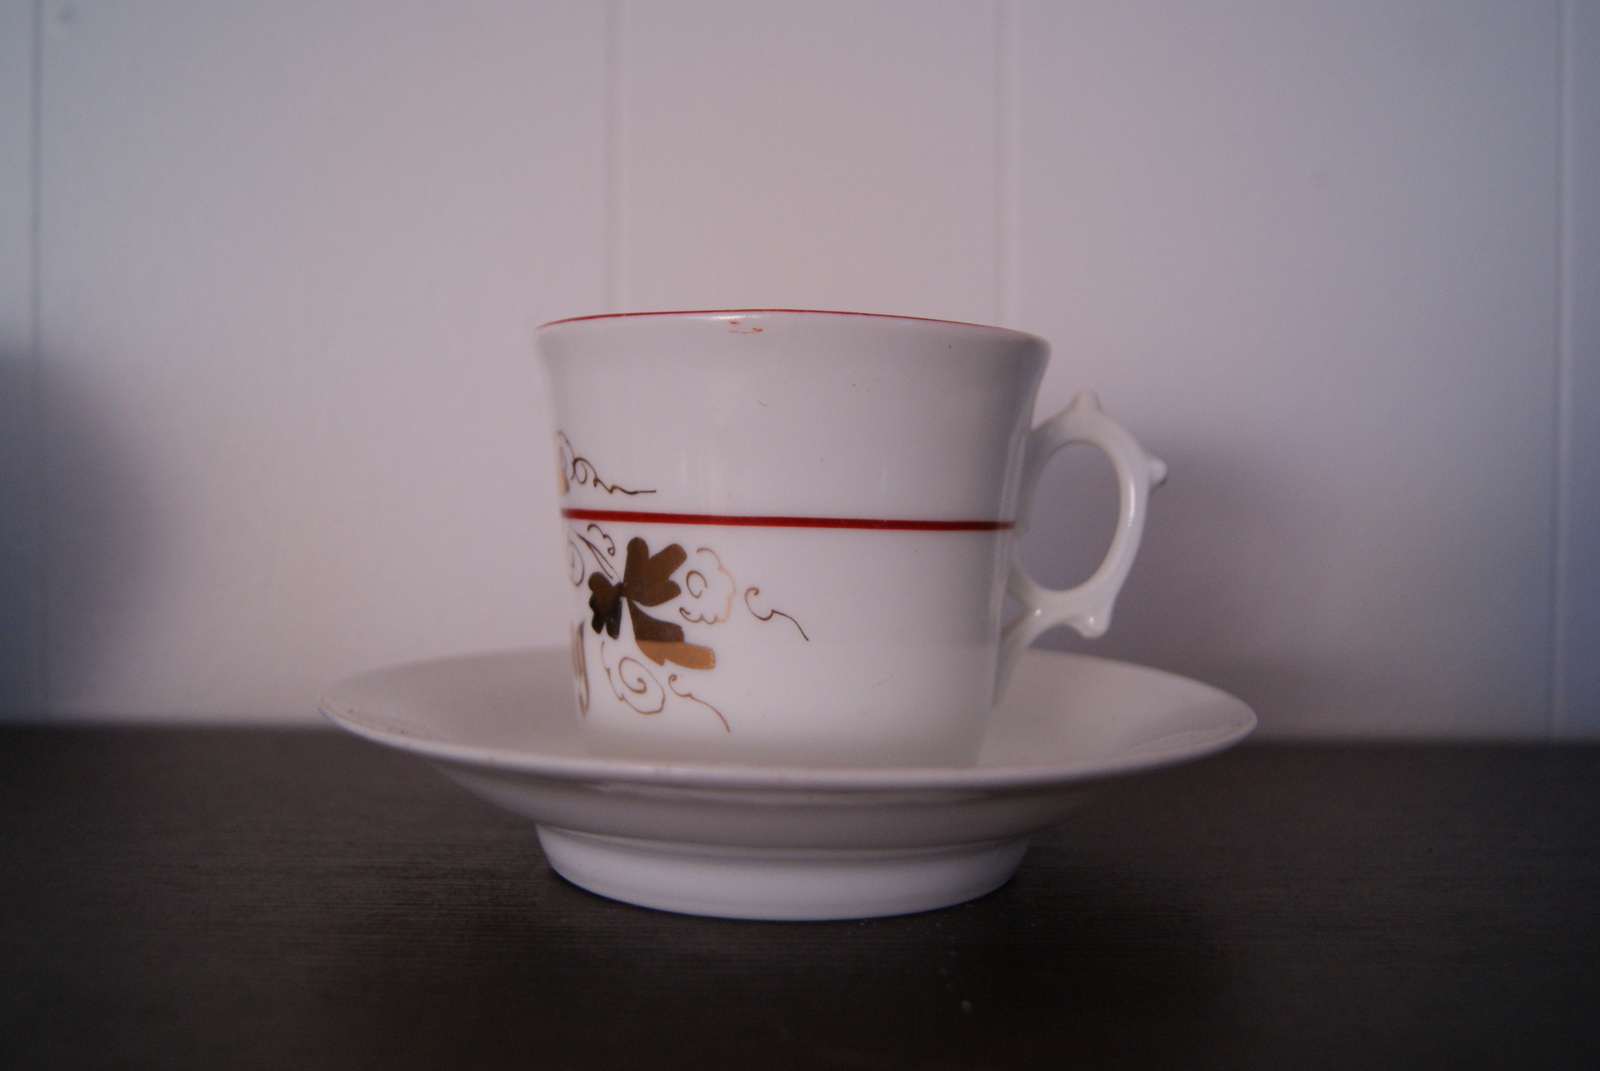 Porsgrund cup with saucer, golden decor, red band and inscription: "til erindring"